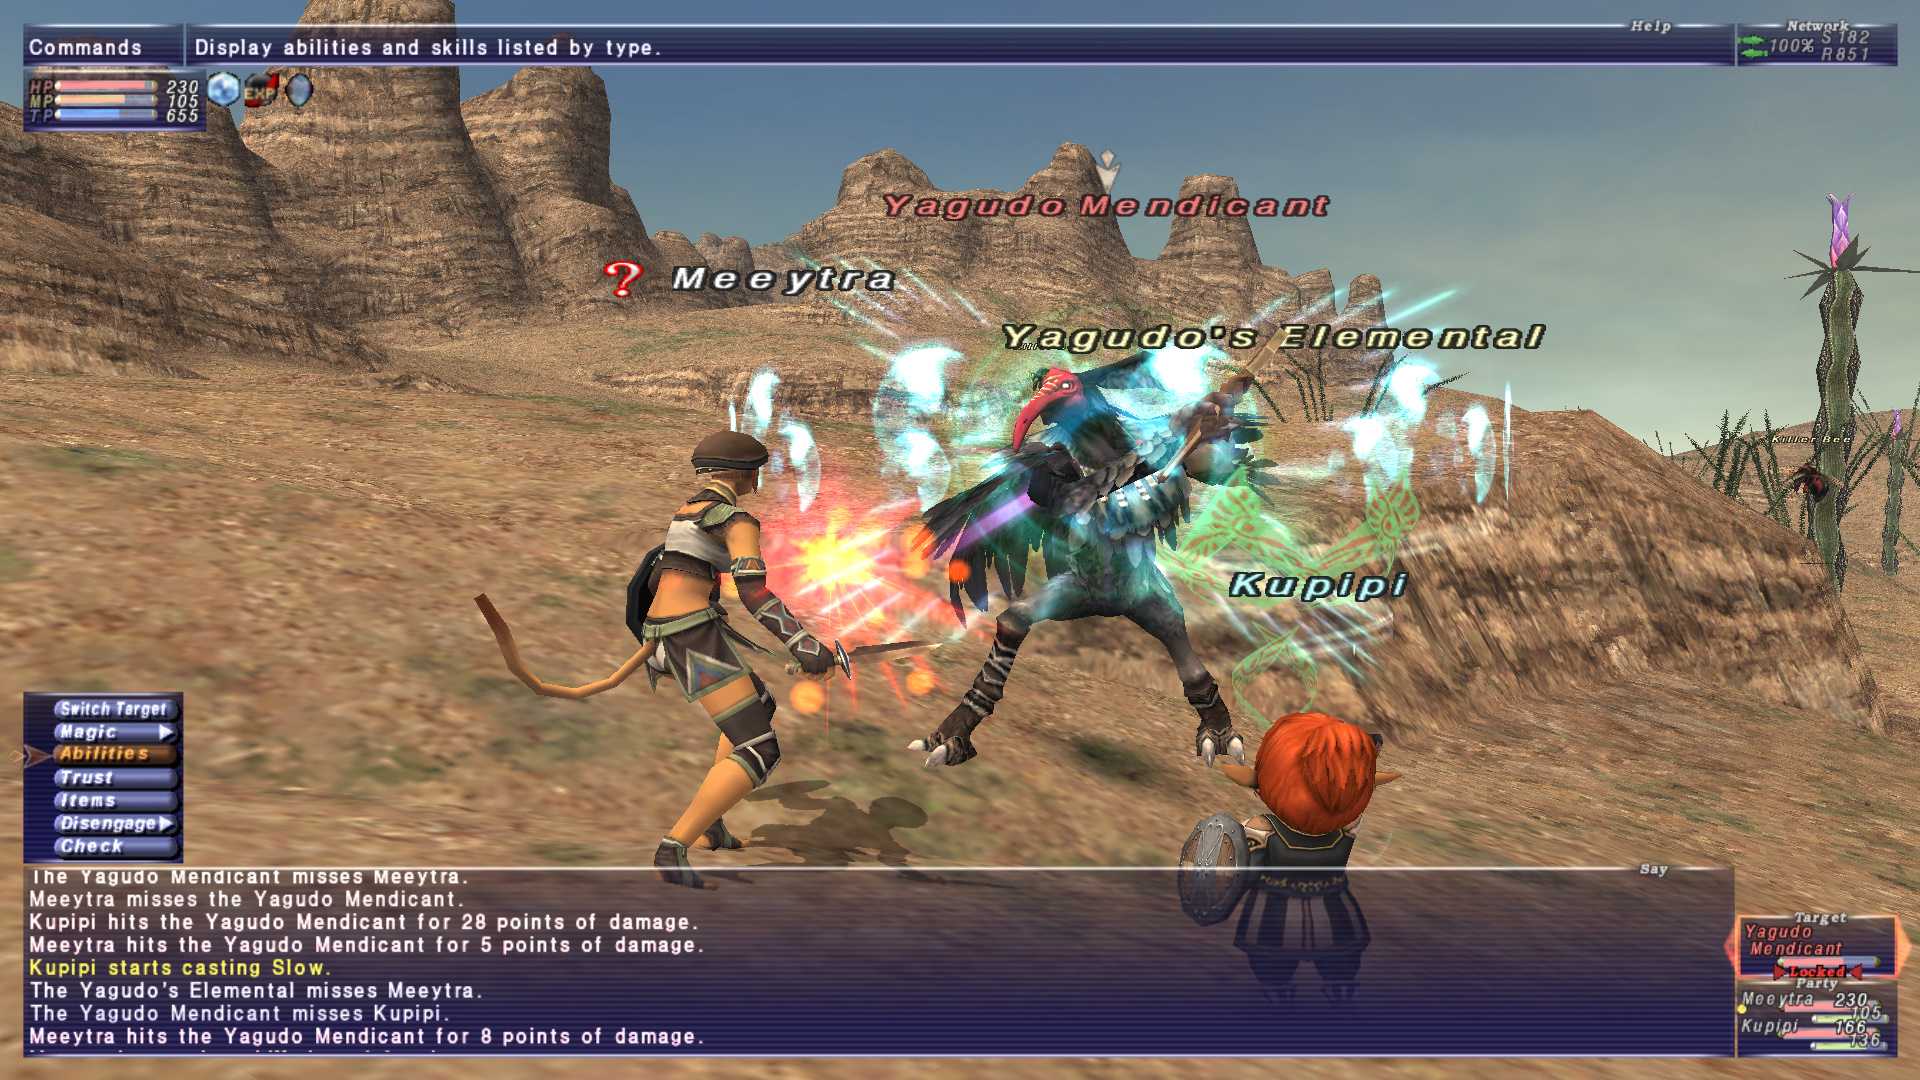 Final Fantasy XI Review - GameRevolution